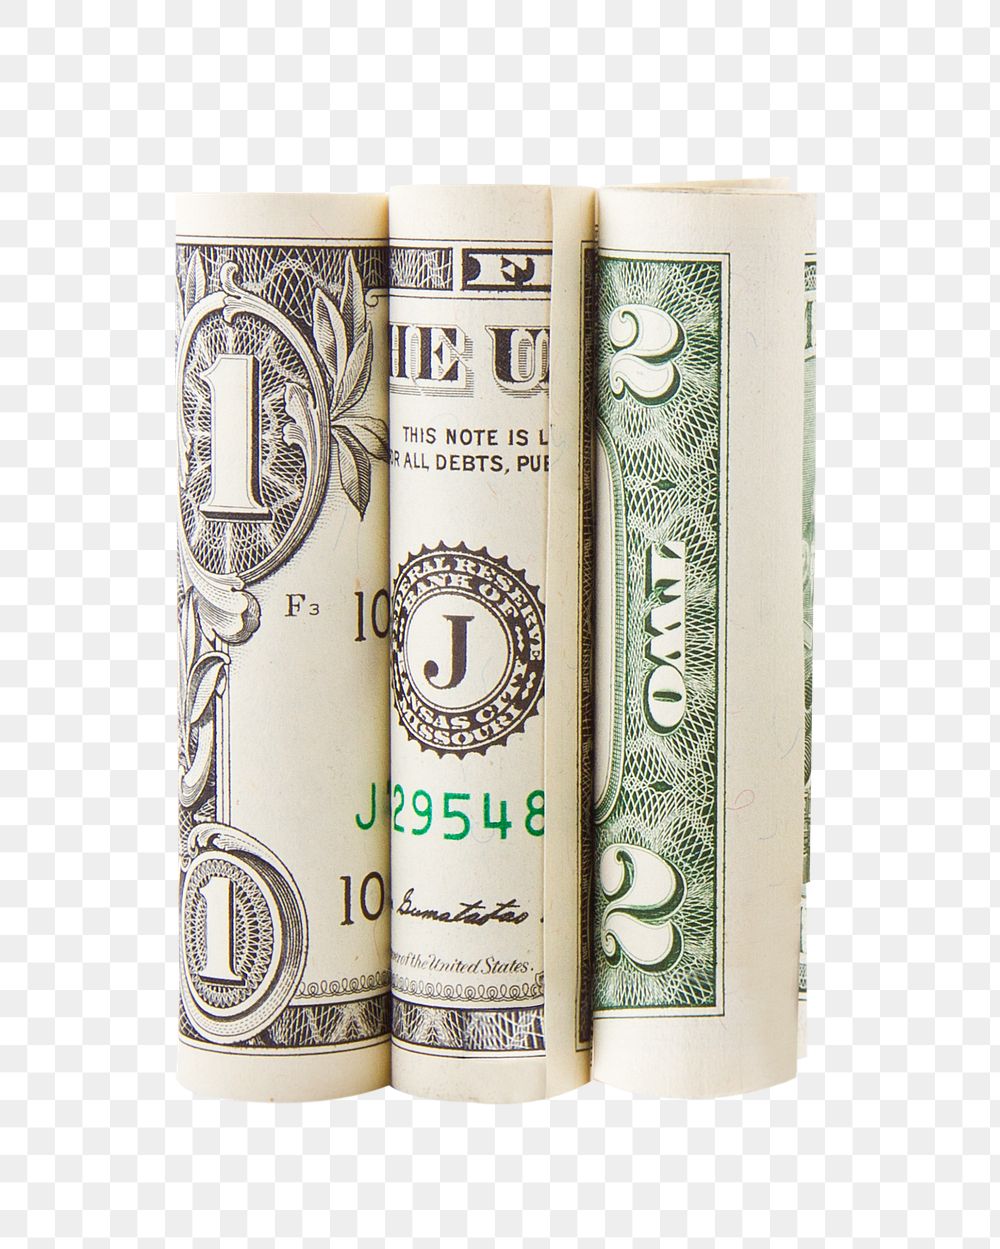 U.S. dollar rolls png sticker, transparent background